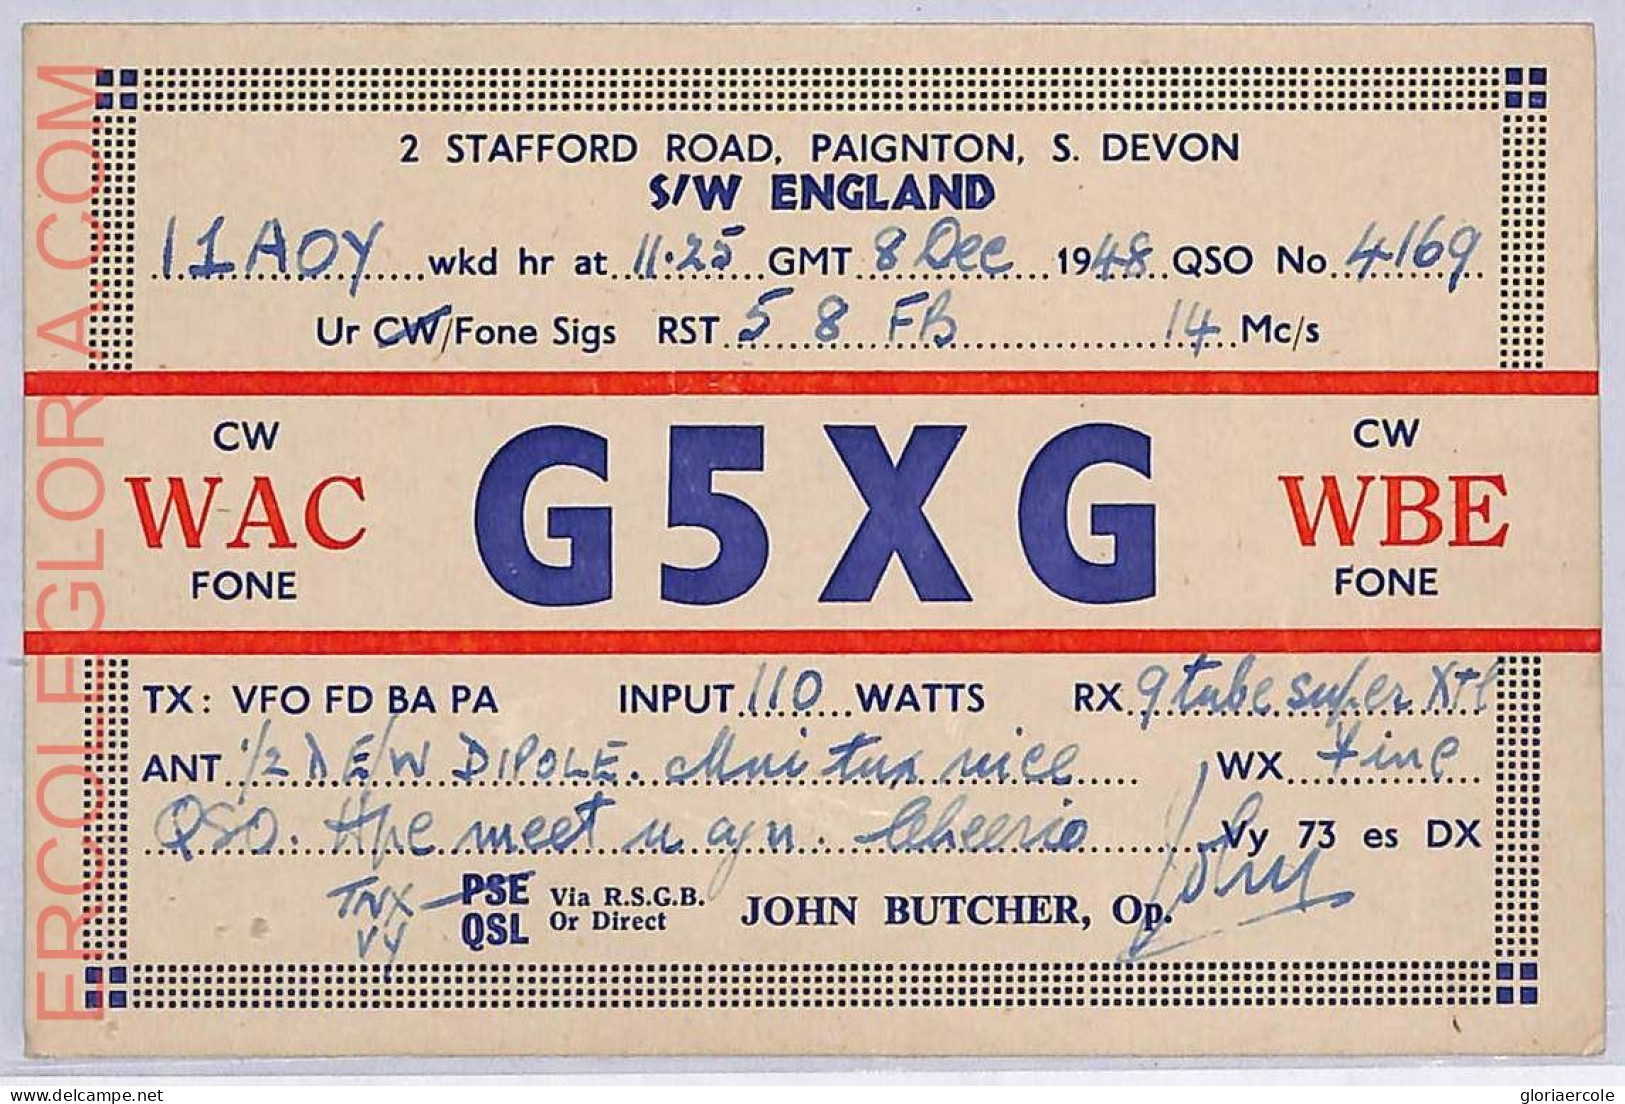 Ad9132 - GREAT BRITAIN - RADIO FREQUENCY CARD - England - 1948 - Radio